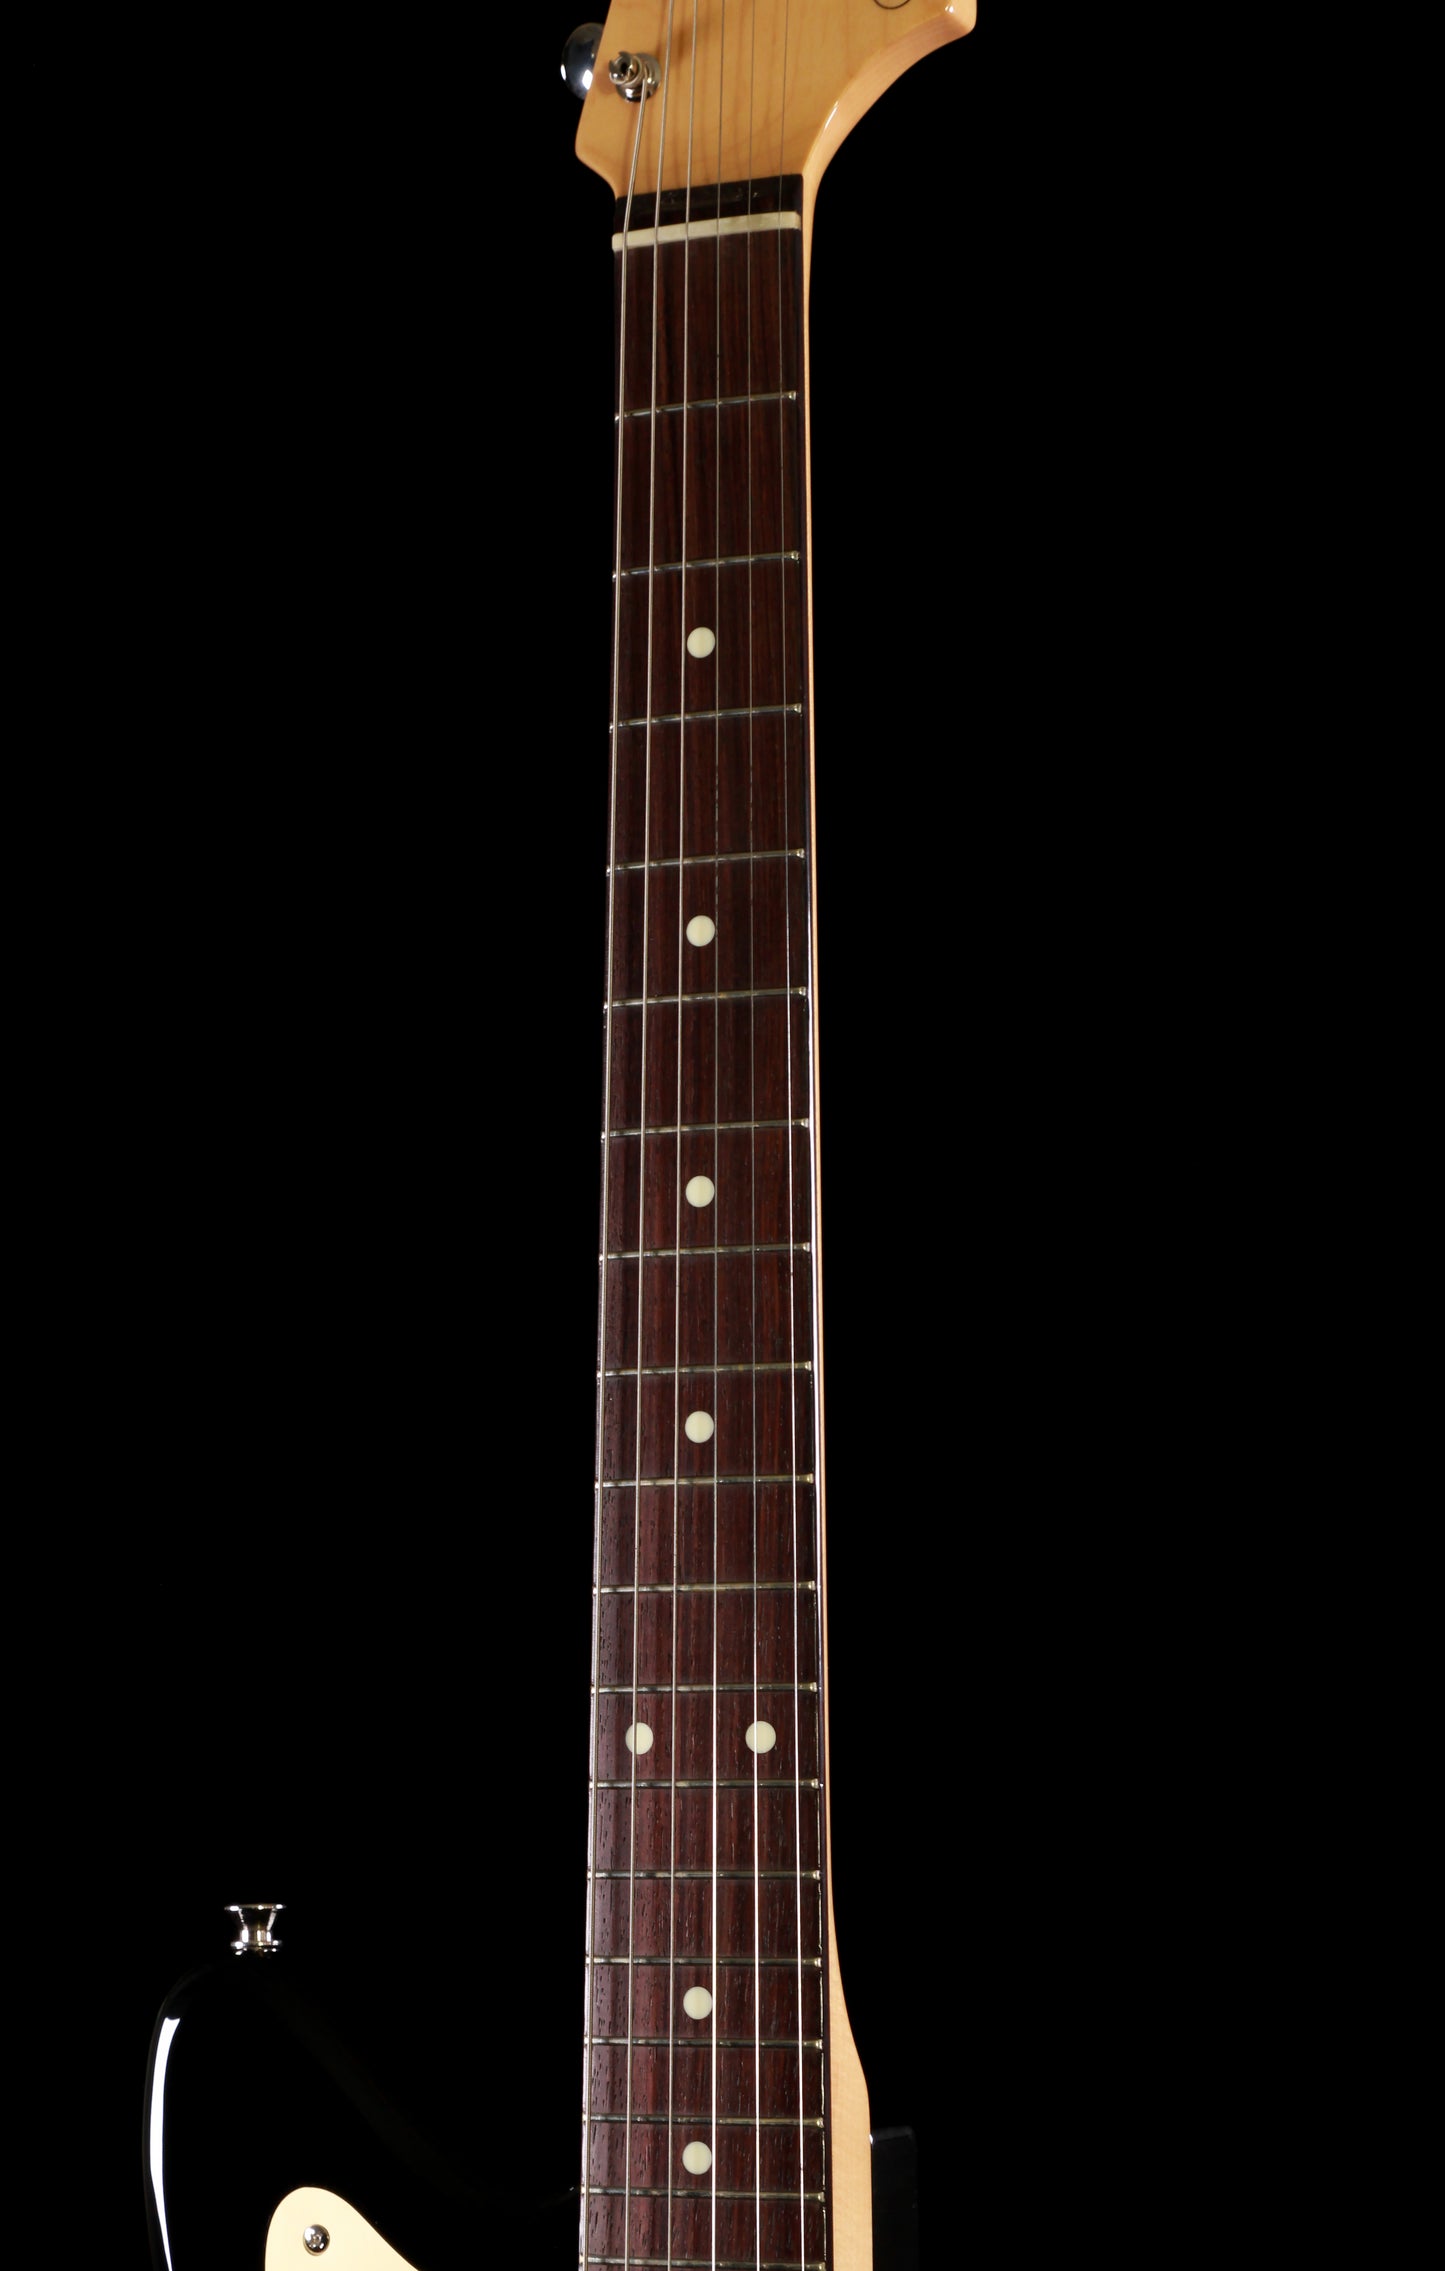 Fender Japan Inoran Signature Jazzmaster Black / Gold Anodized Pickguard